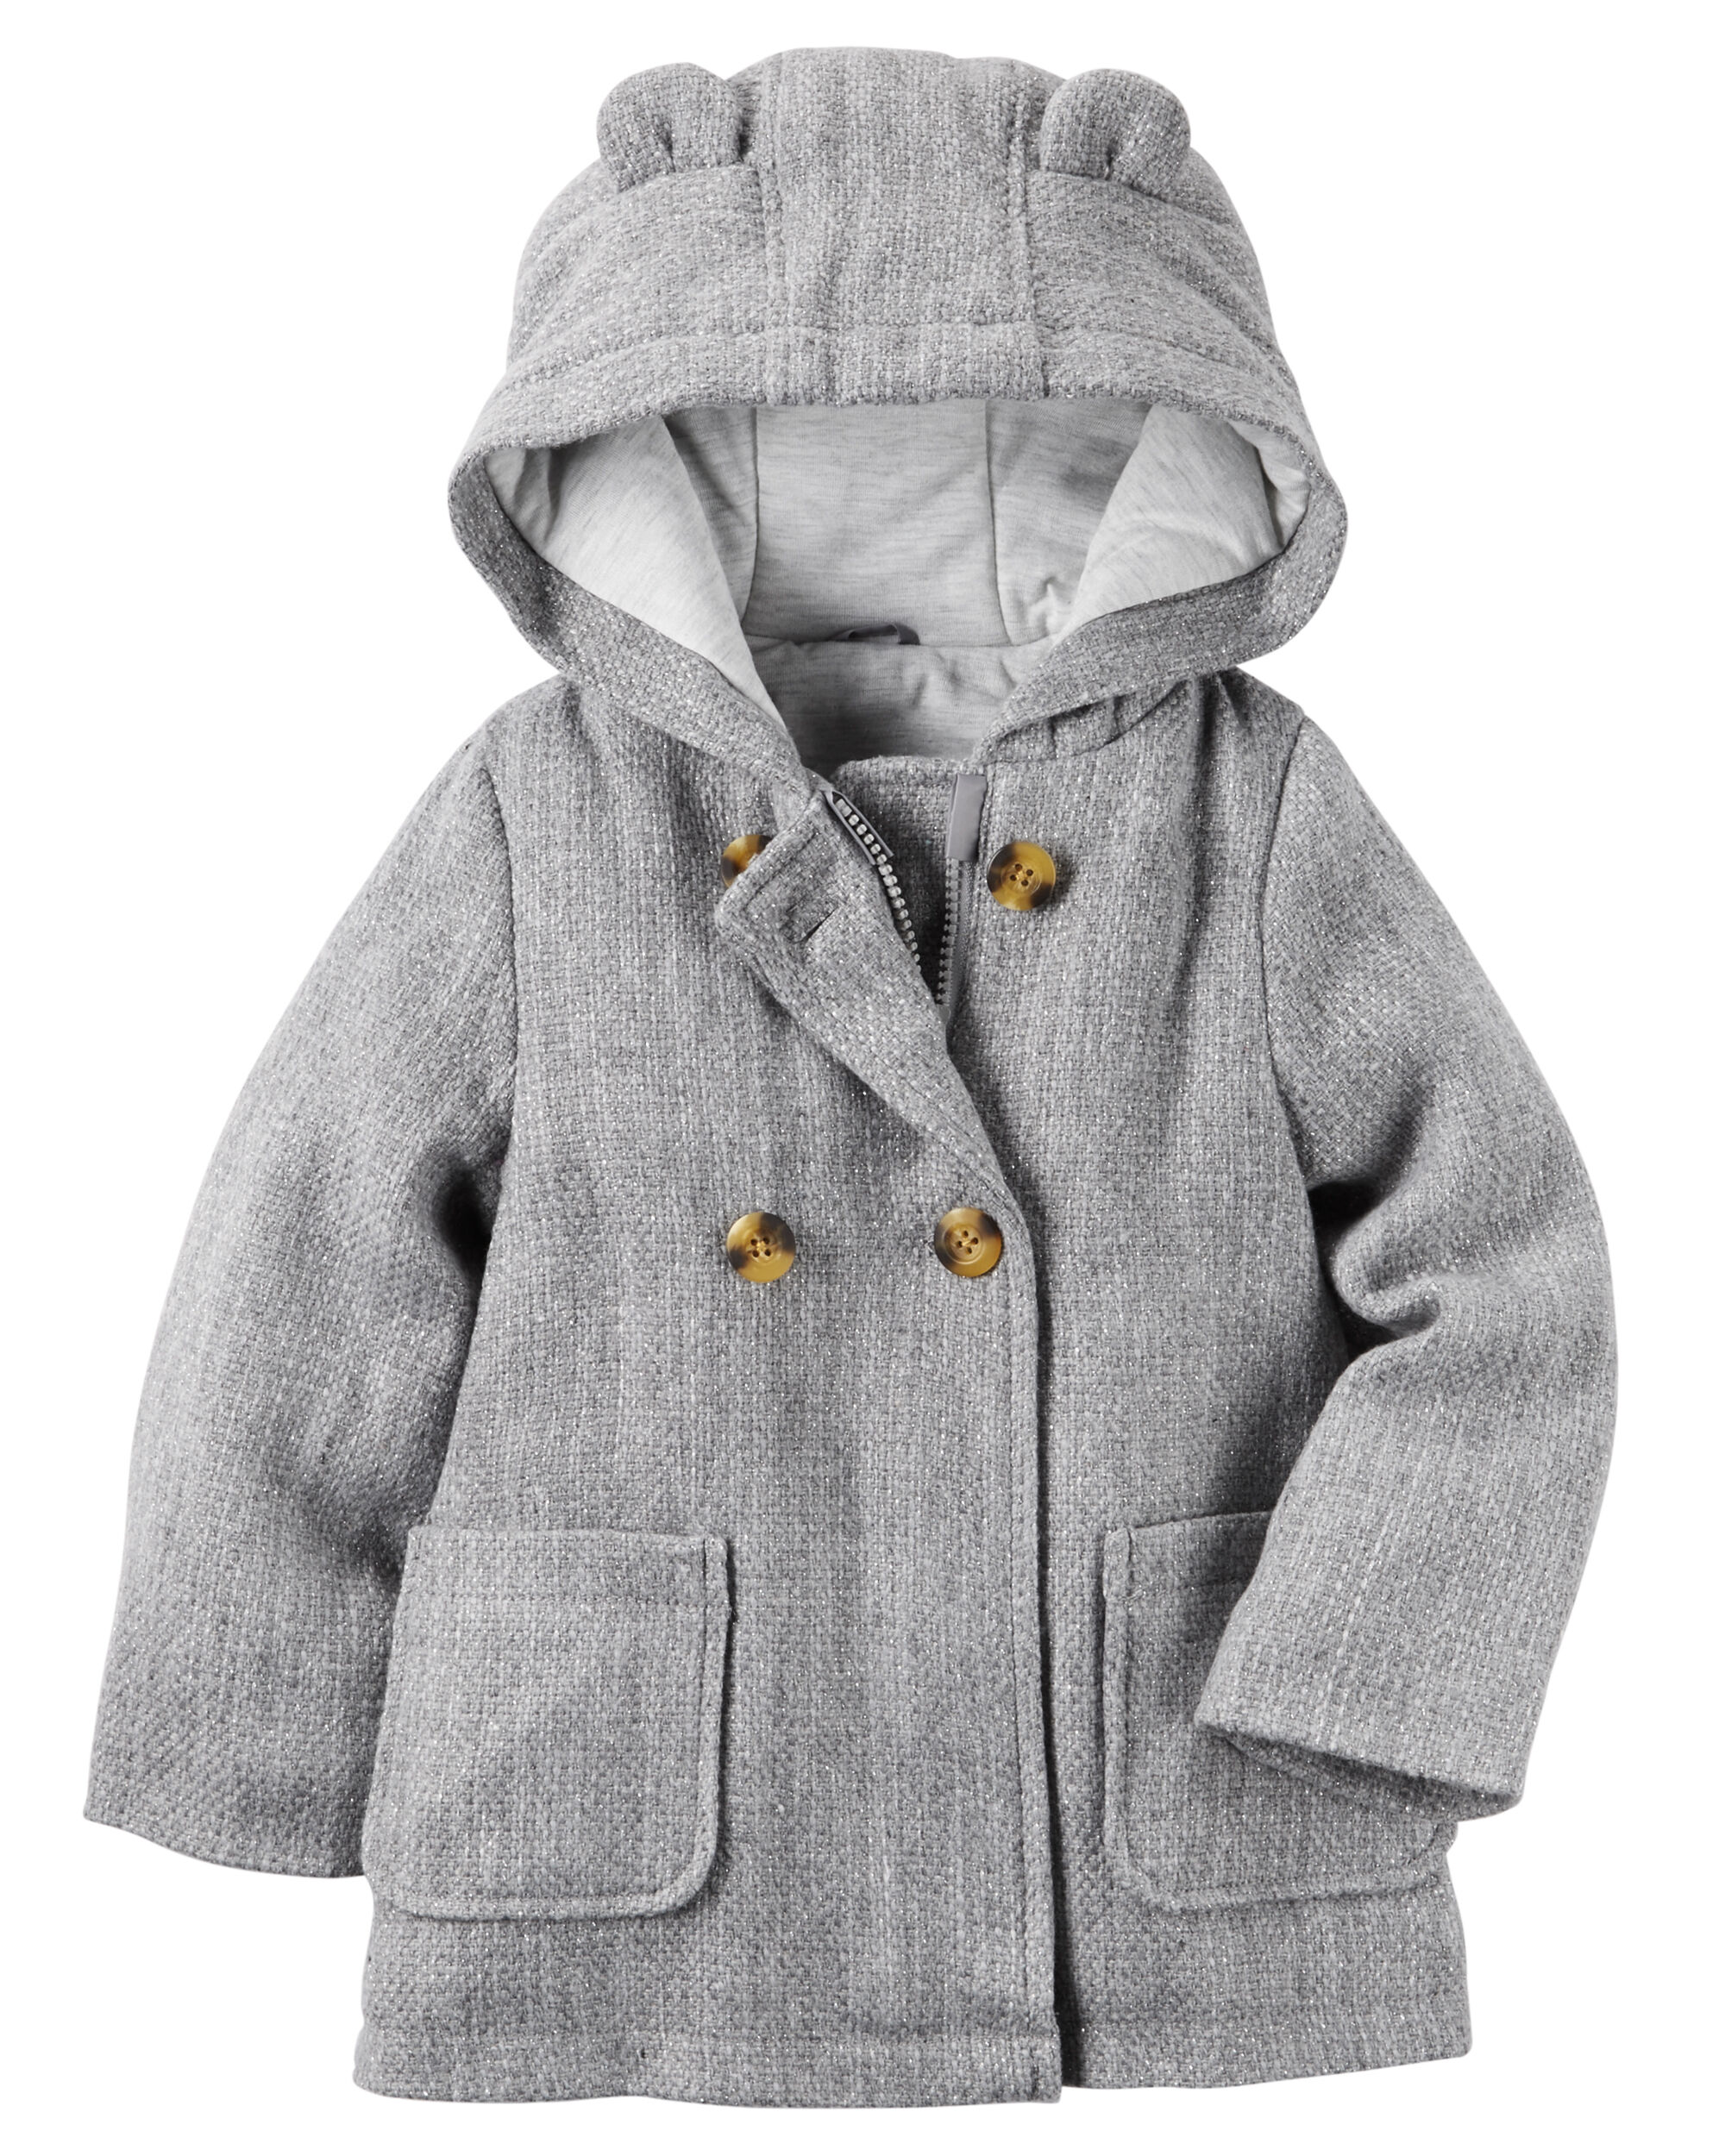 Toddler Pea Coat With Hood | Han Coats